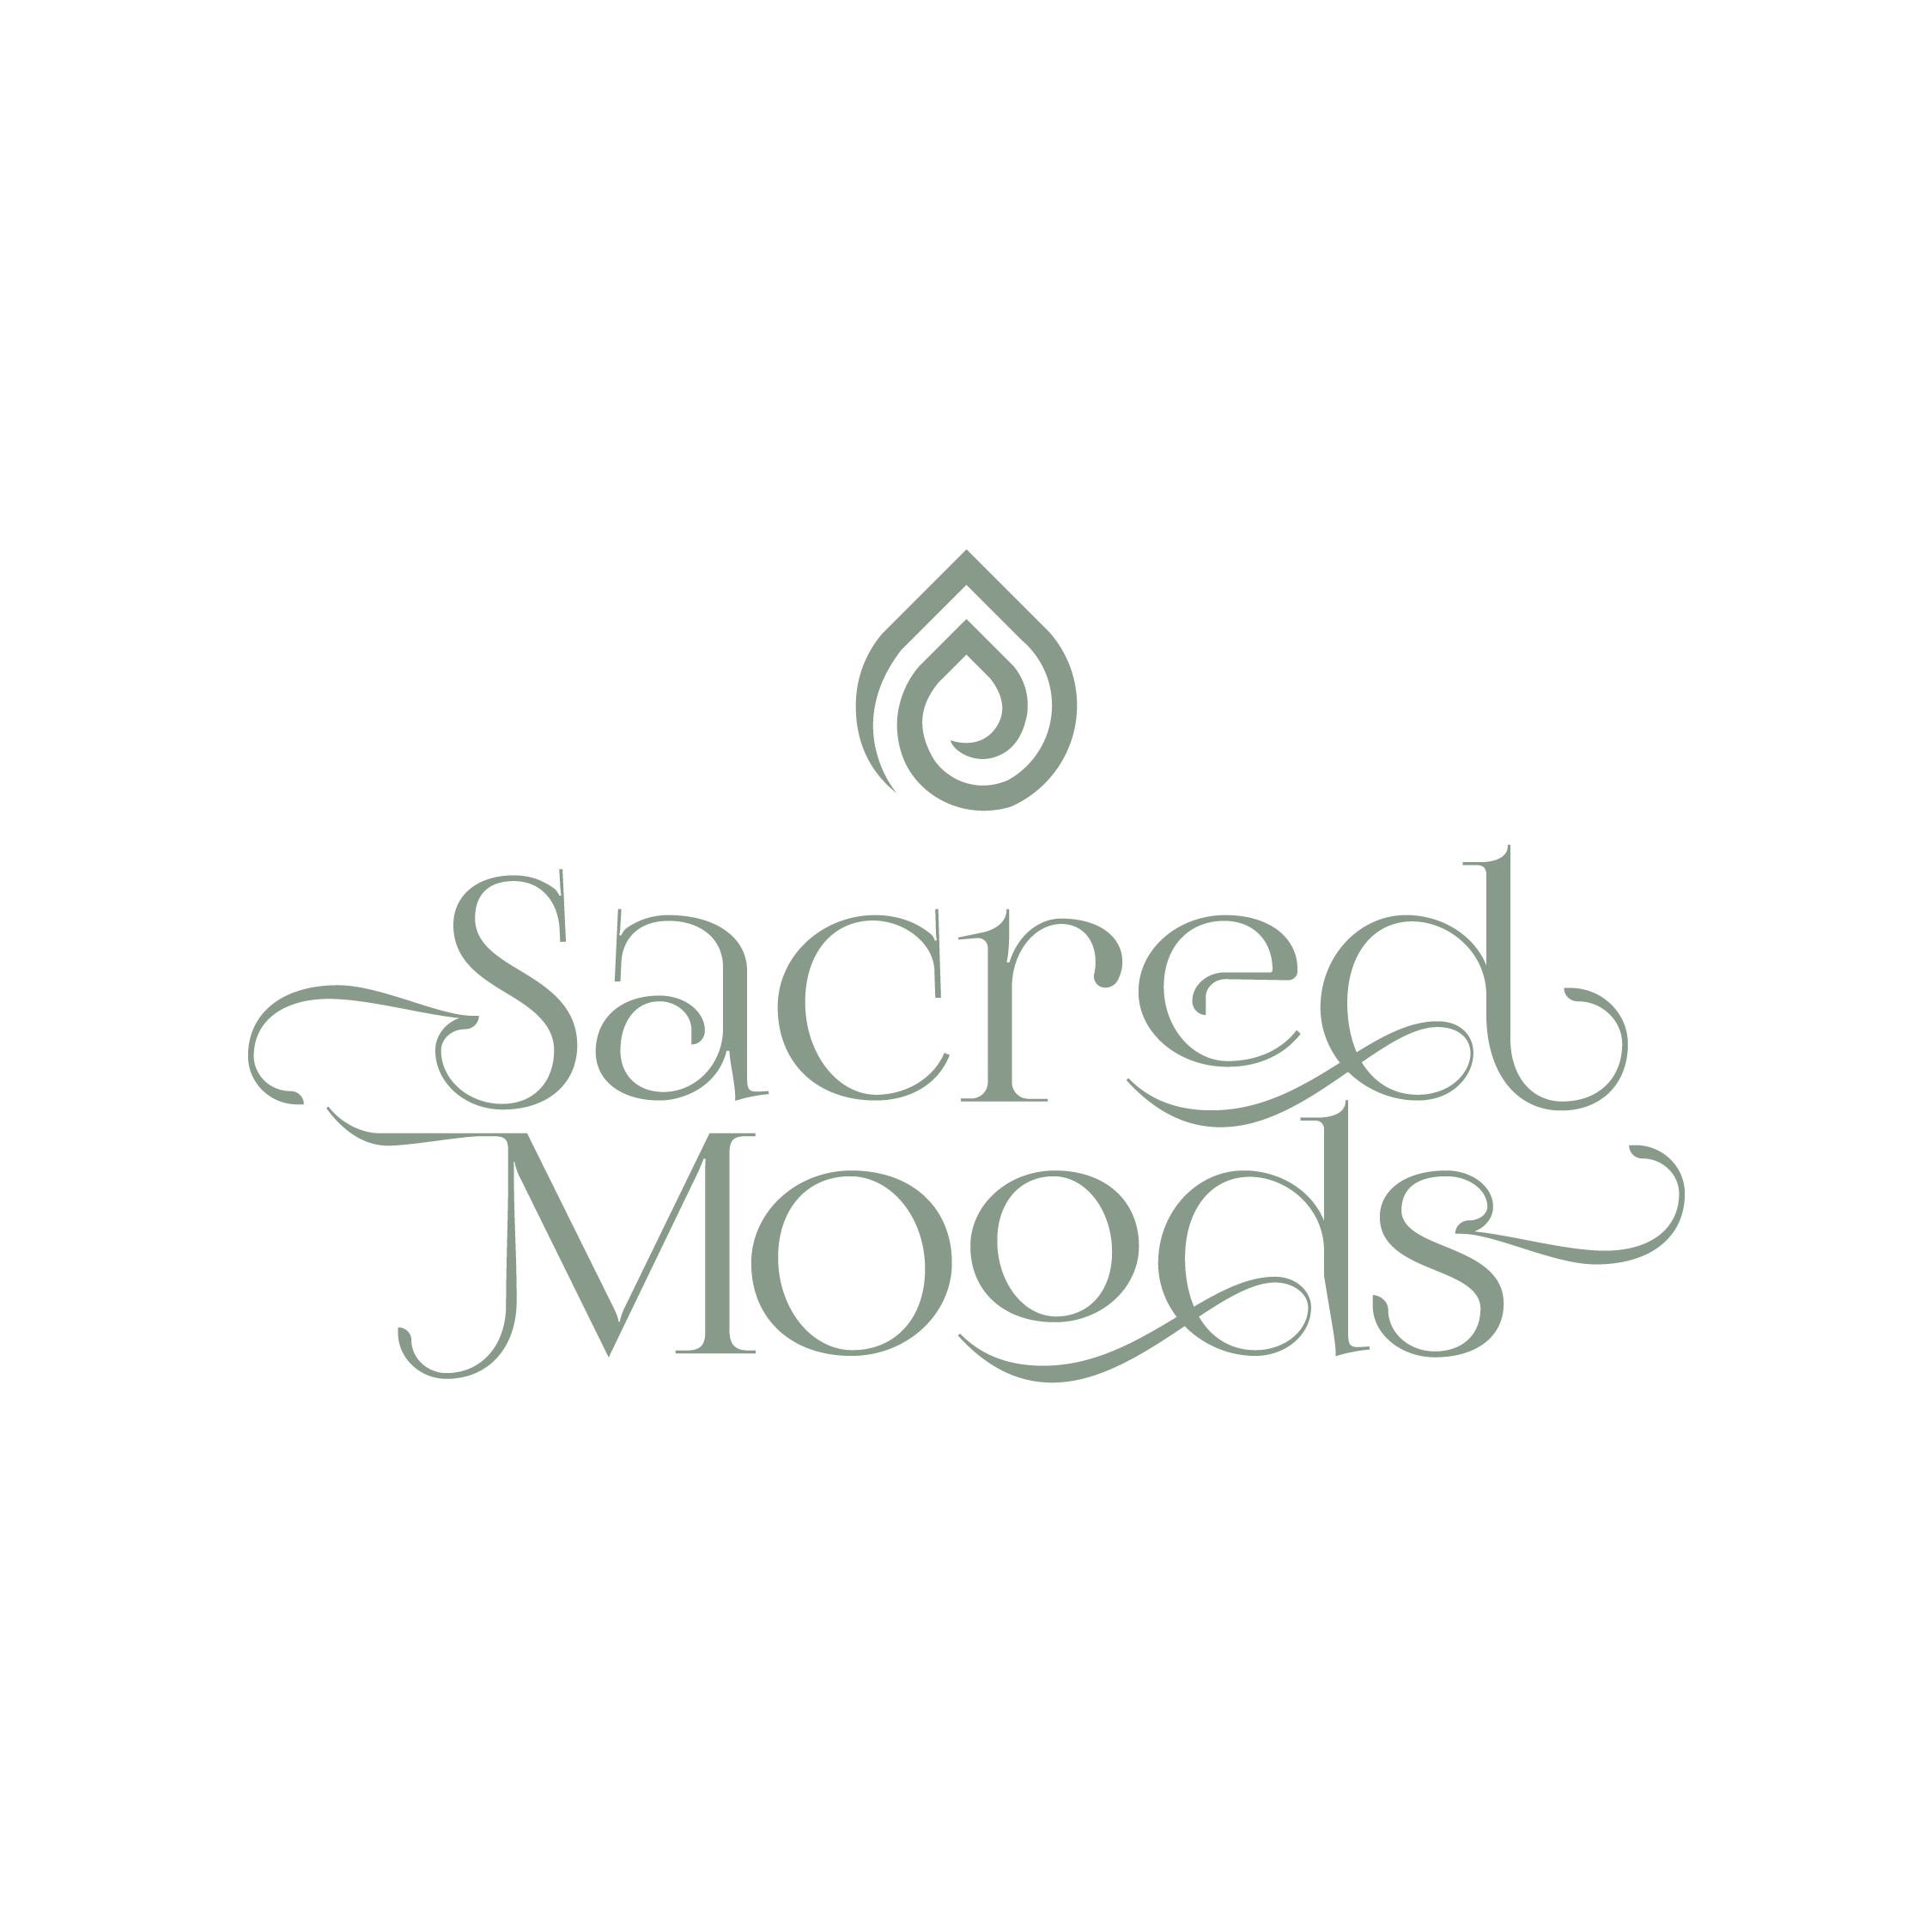 Sacred Moods